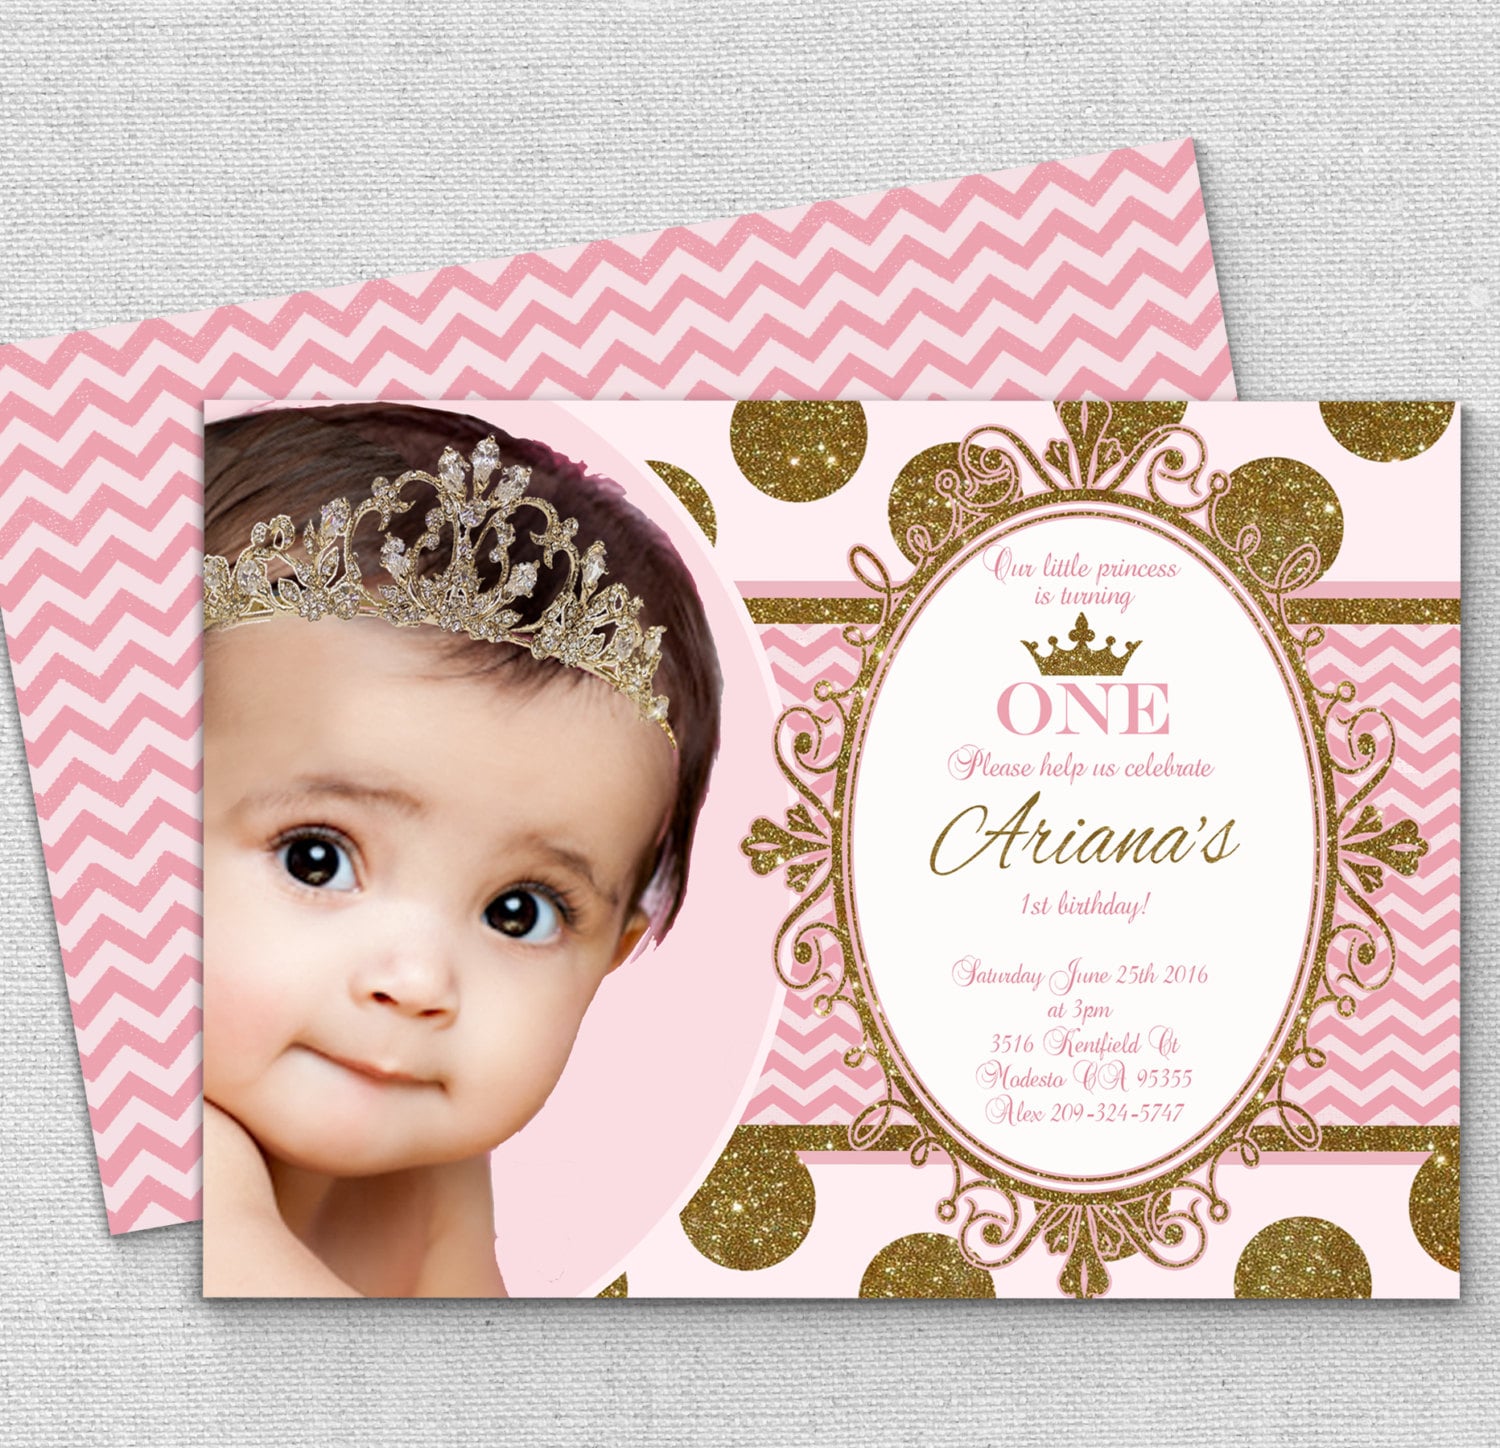 pink gold princess invitation polk a dot chevron princess | Etsy